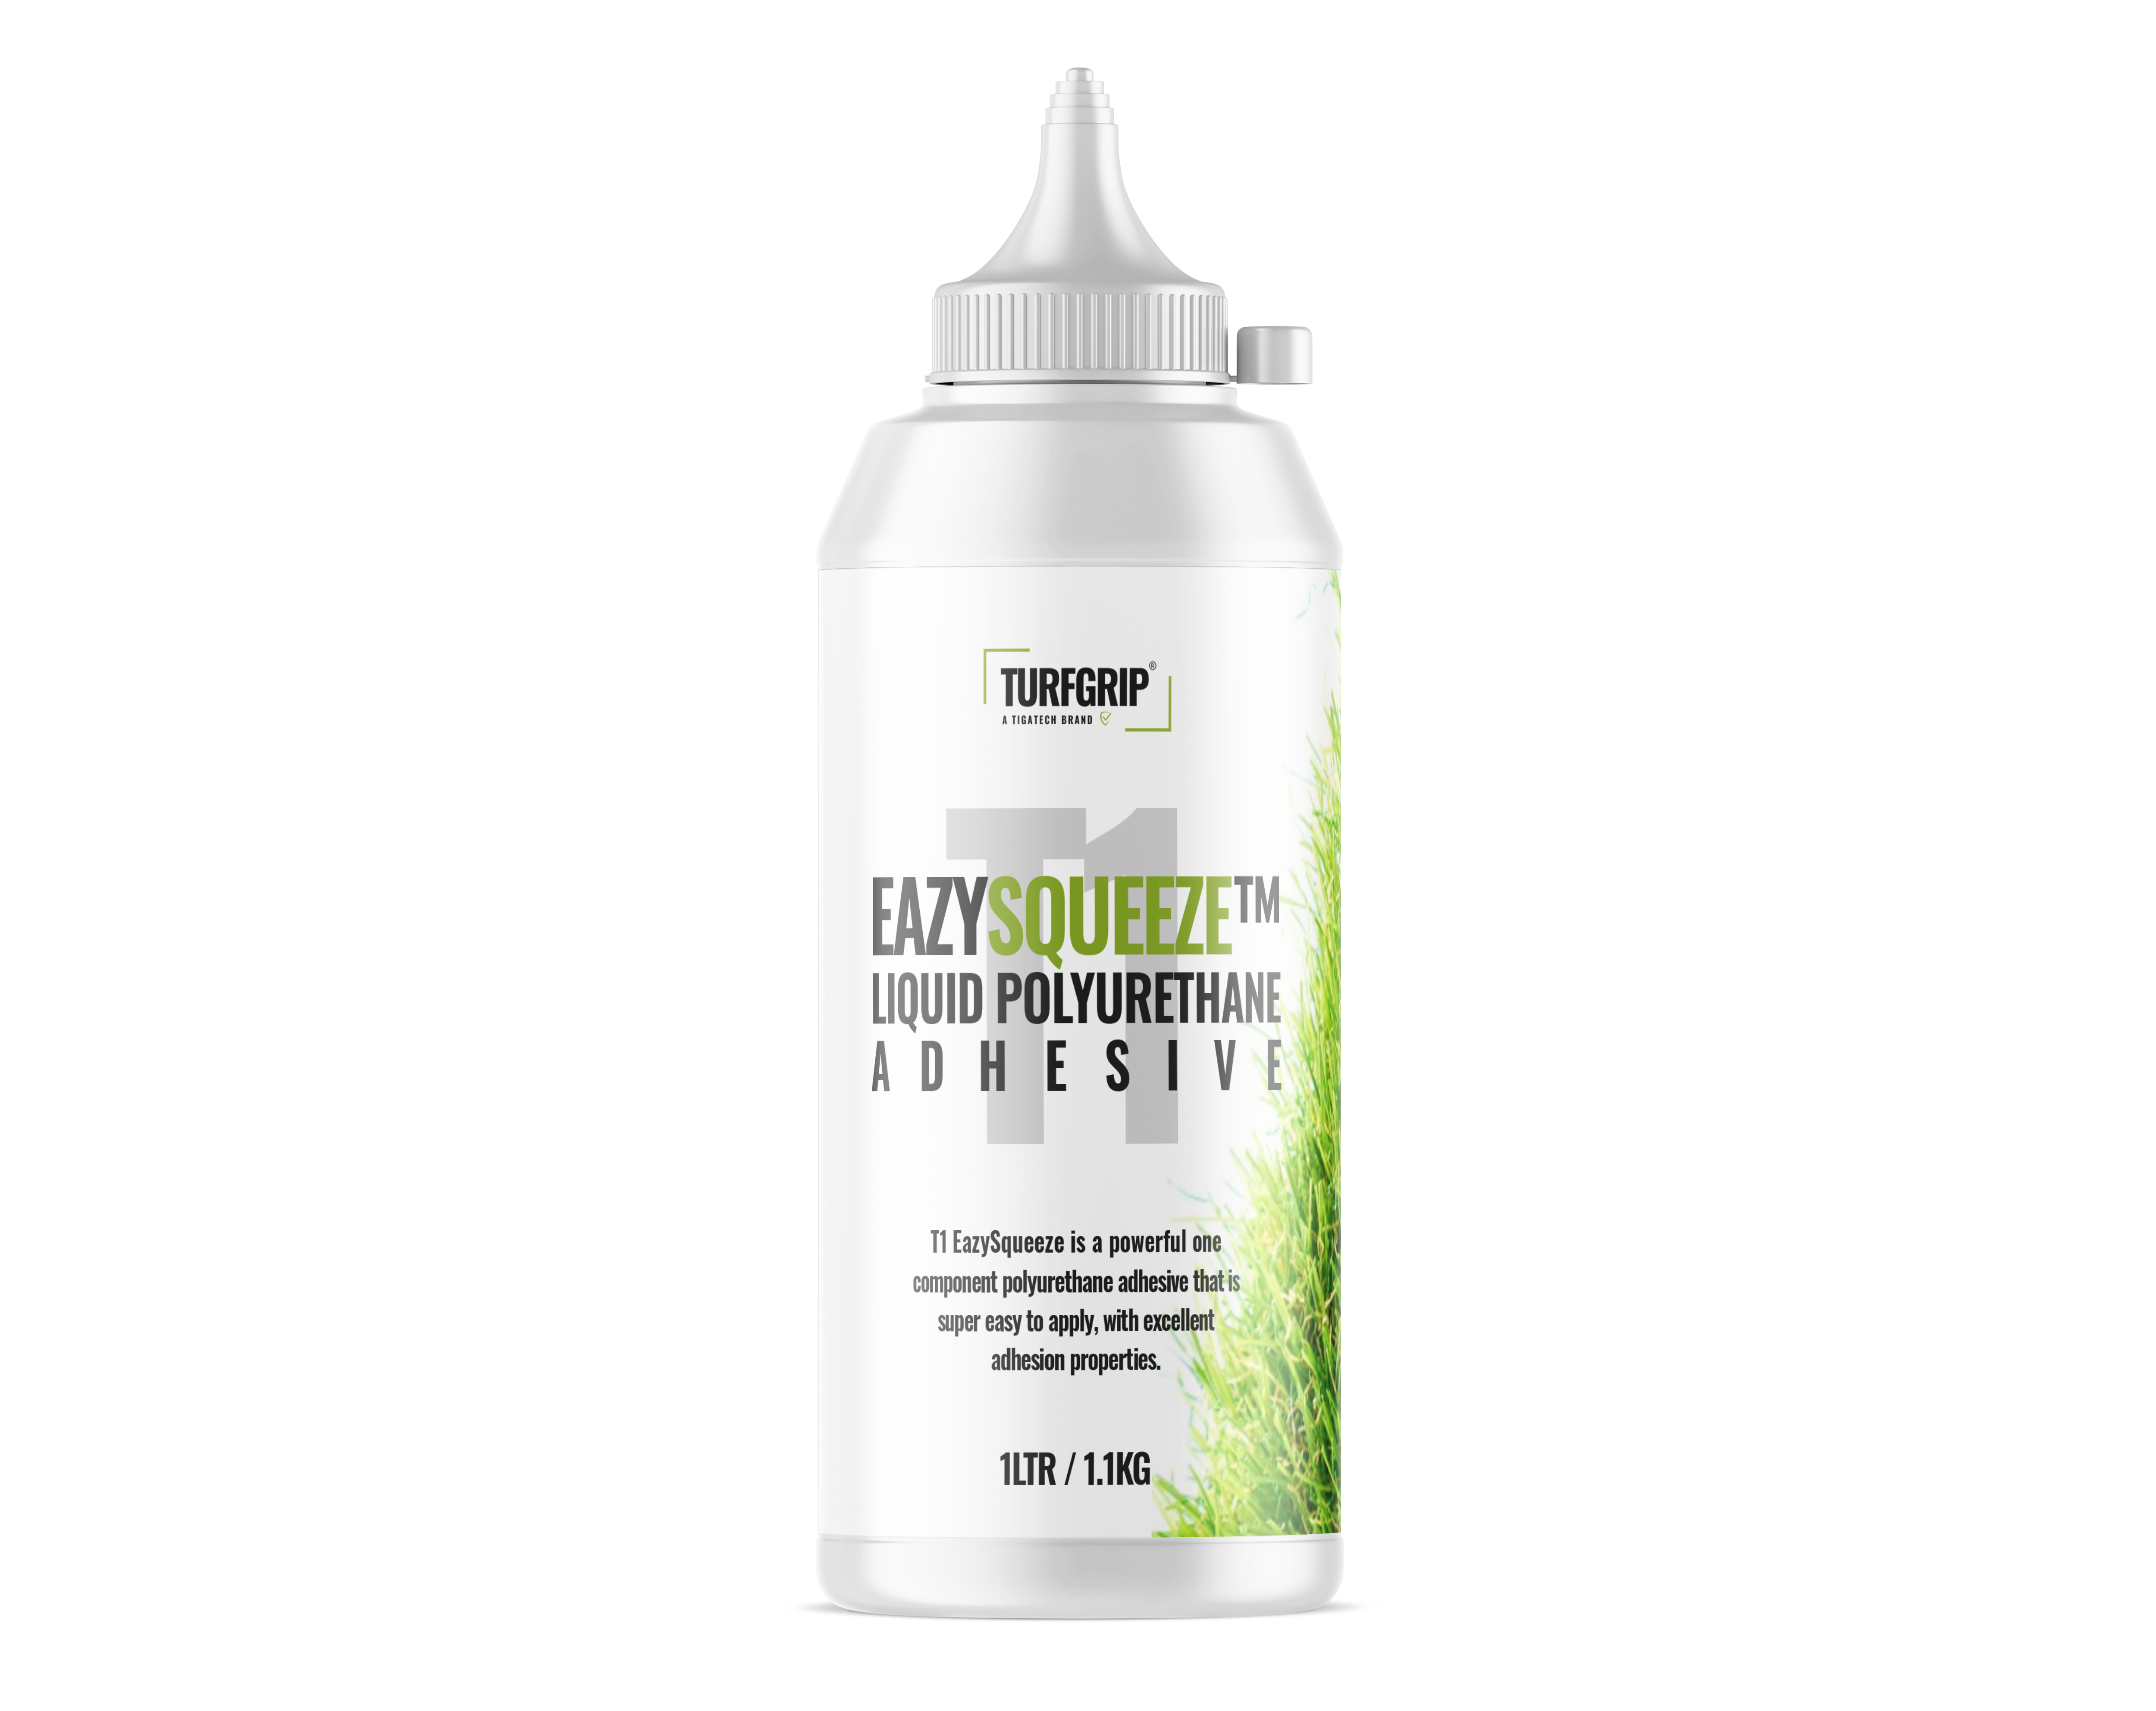 Turfgrip T1 EazySqueeze™ Liquid Polyurethane Adhesive